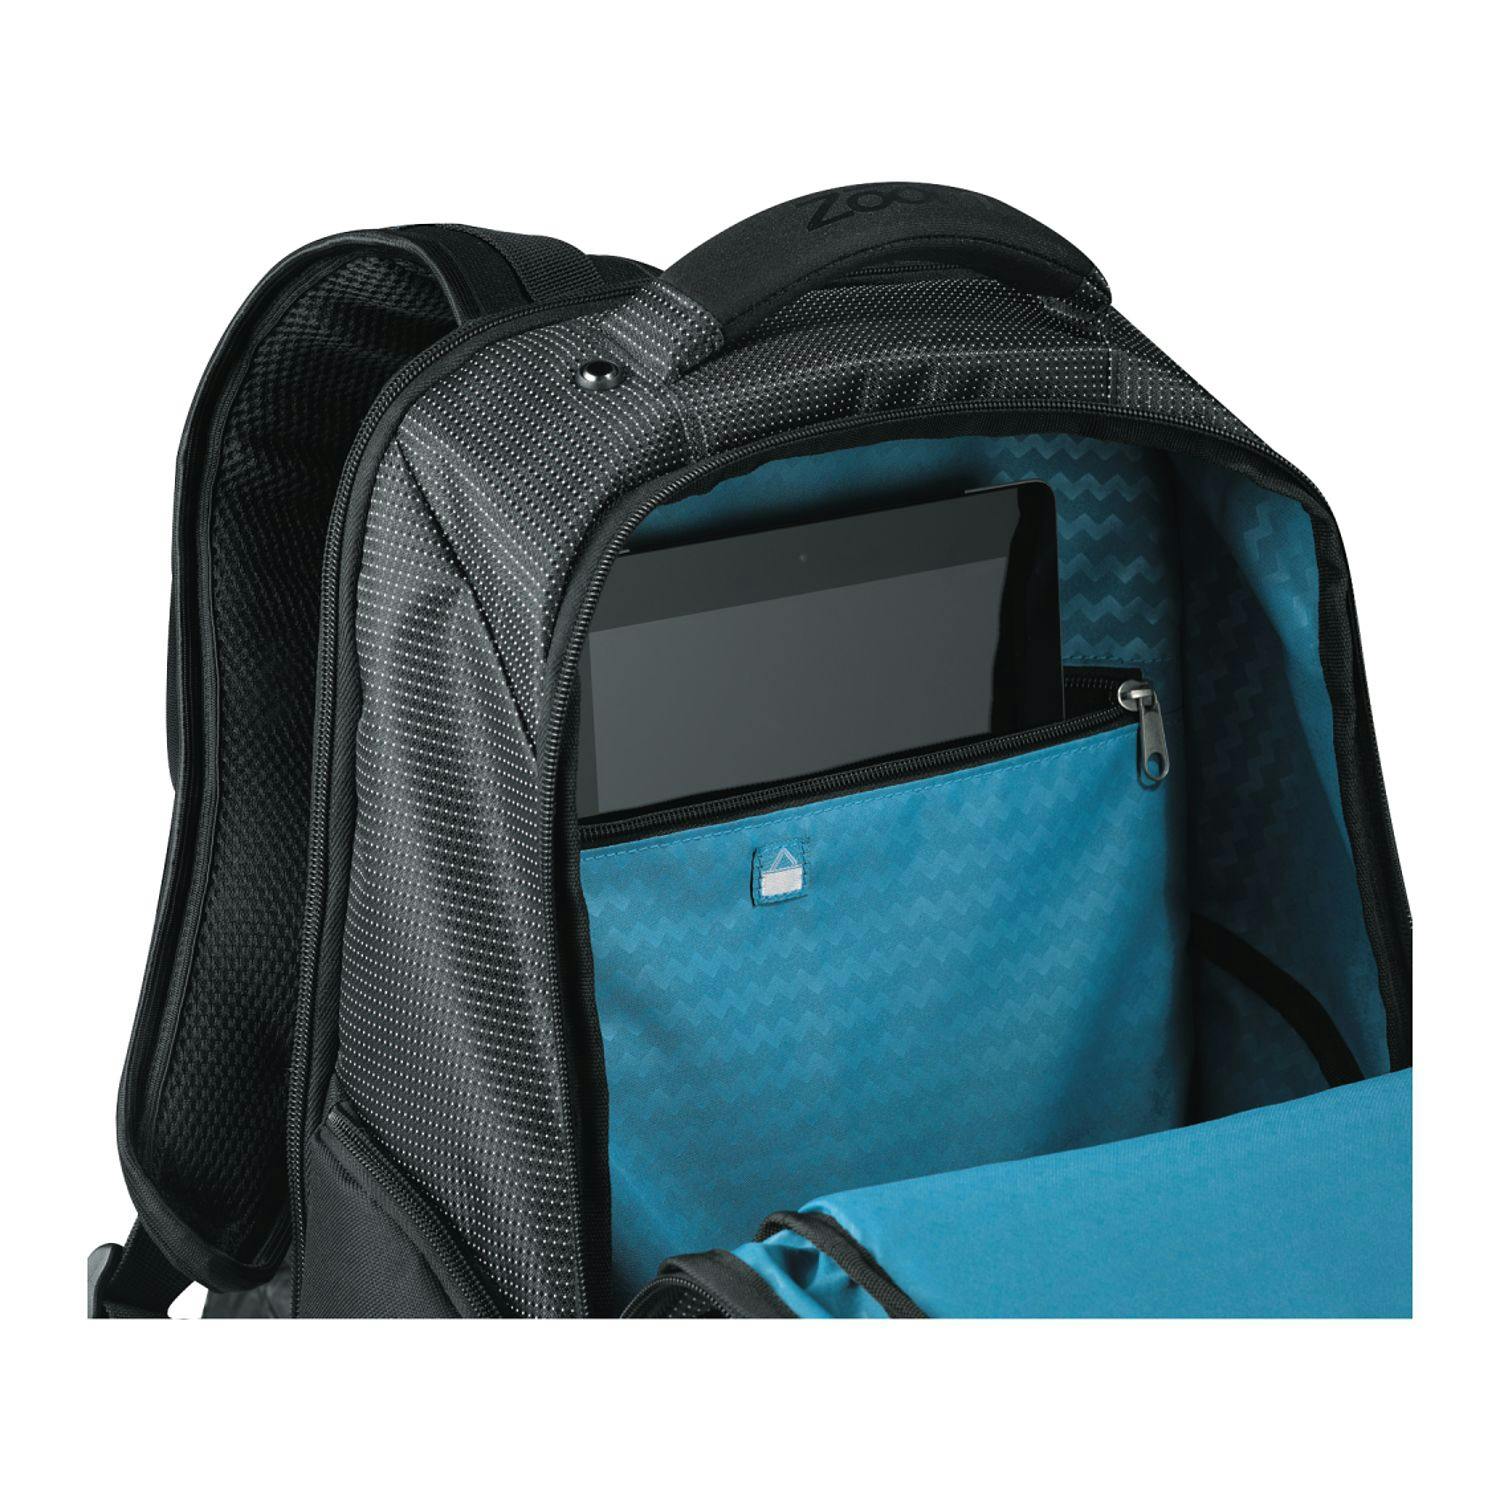 Zoom TSA 15" Computer Backpack - additional Image 4